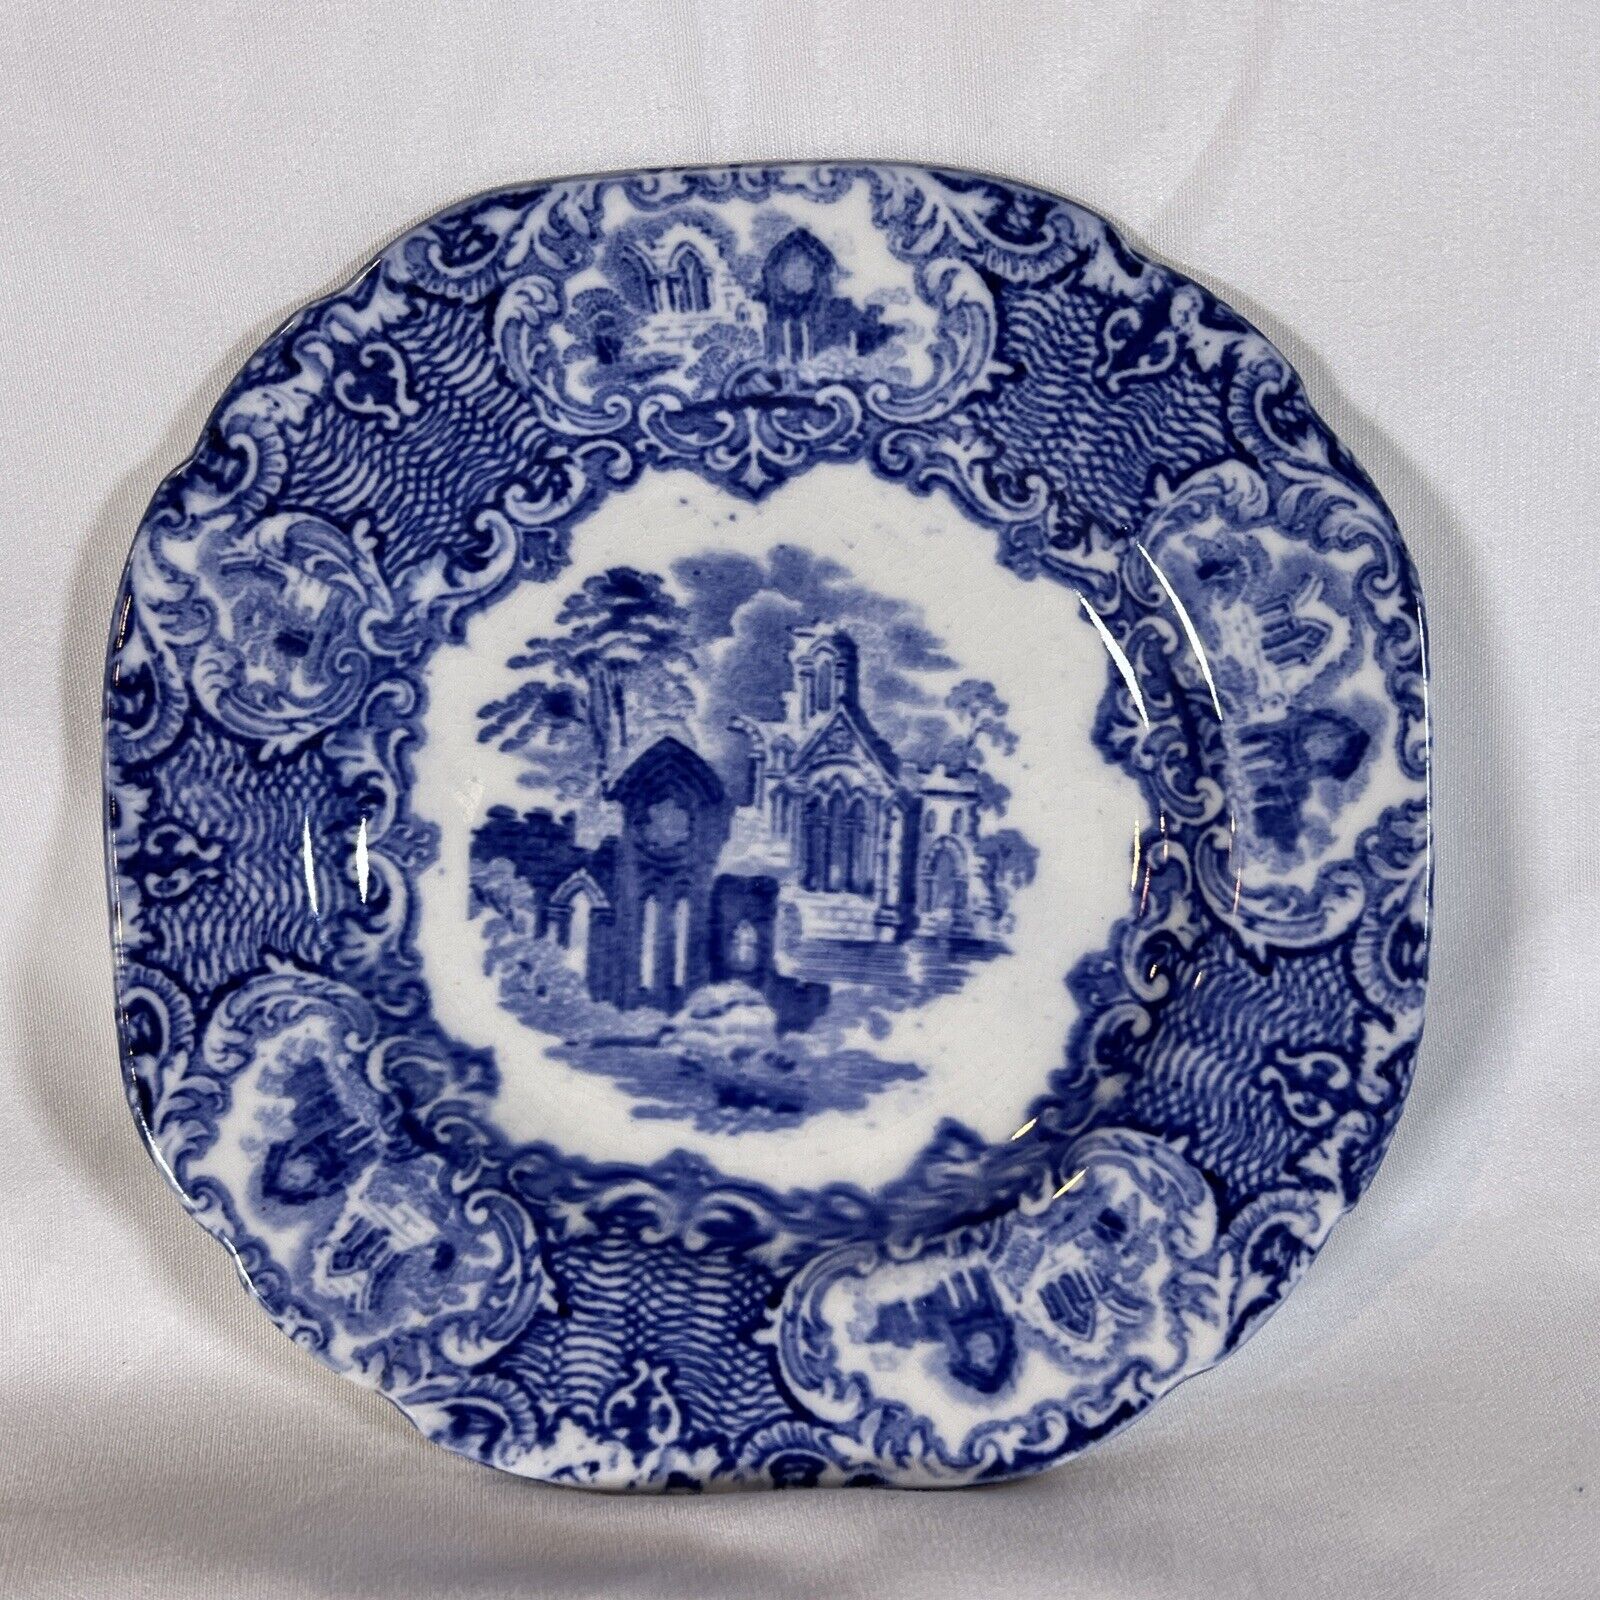 ATQ George Jones & Sons, Abbey 1790 England, 1901-1921 5.5” Octagonal Dish Plate